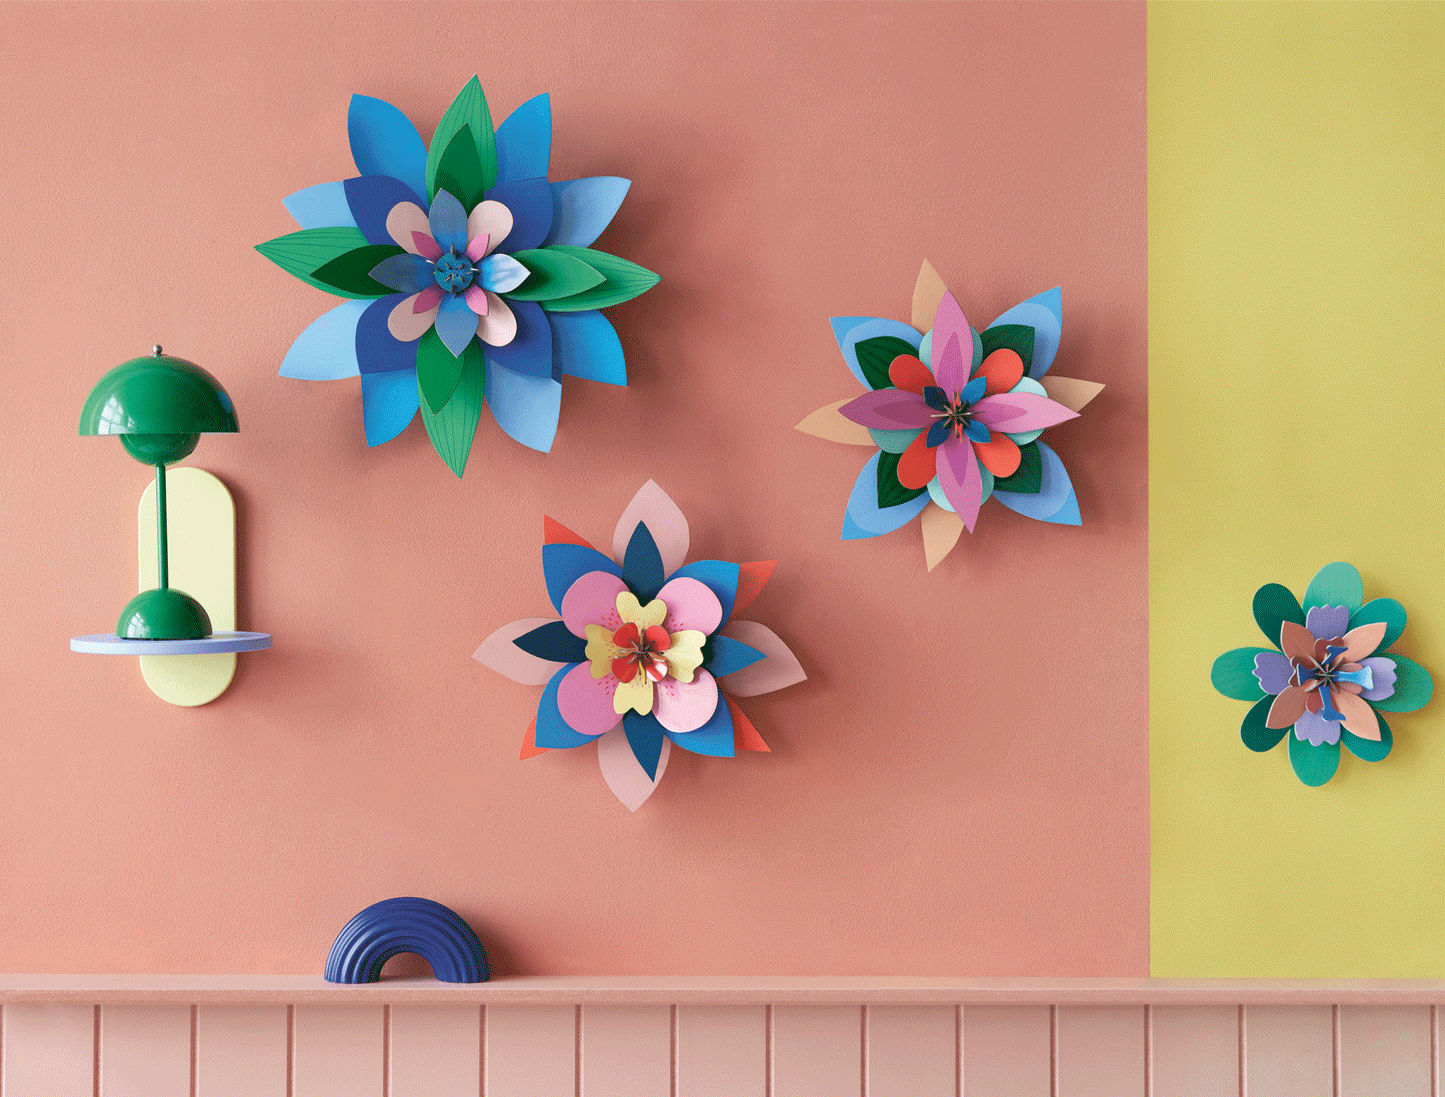 Studio Roof - Floral Wall Art - Deluxe Plum Granita